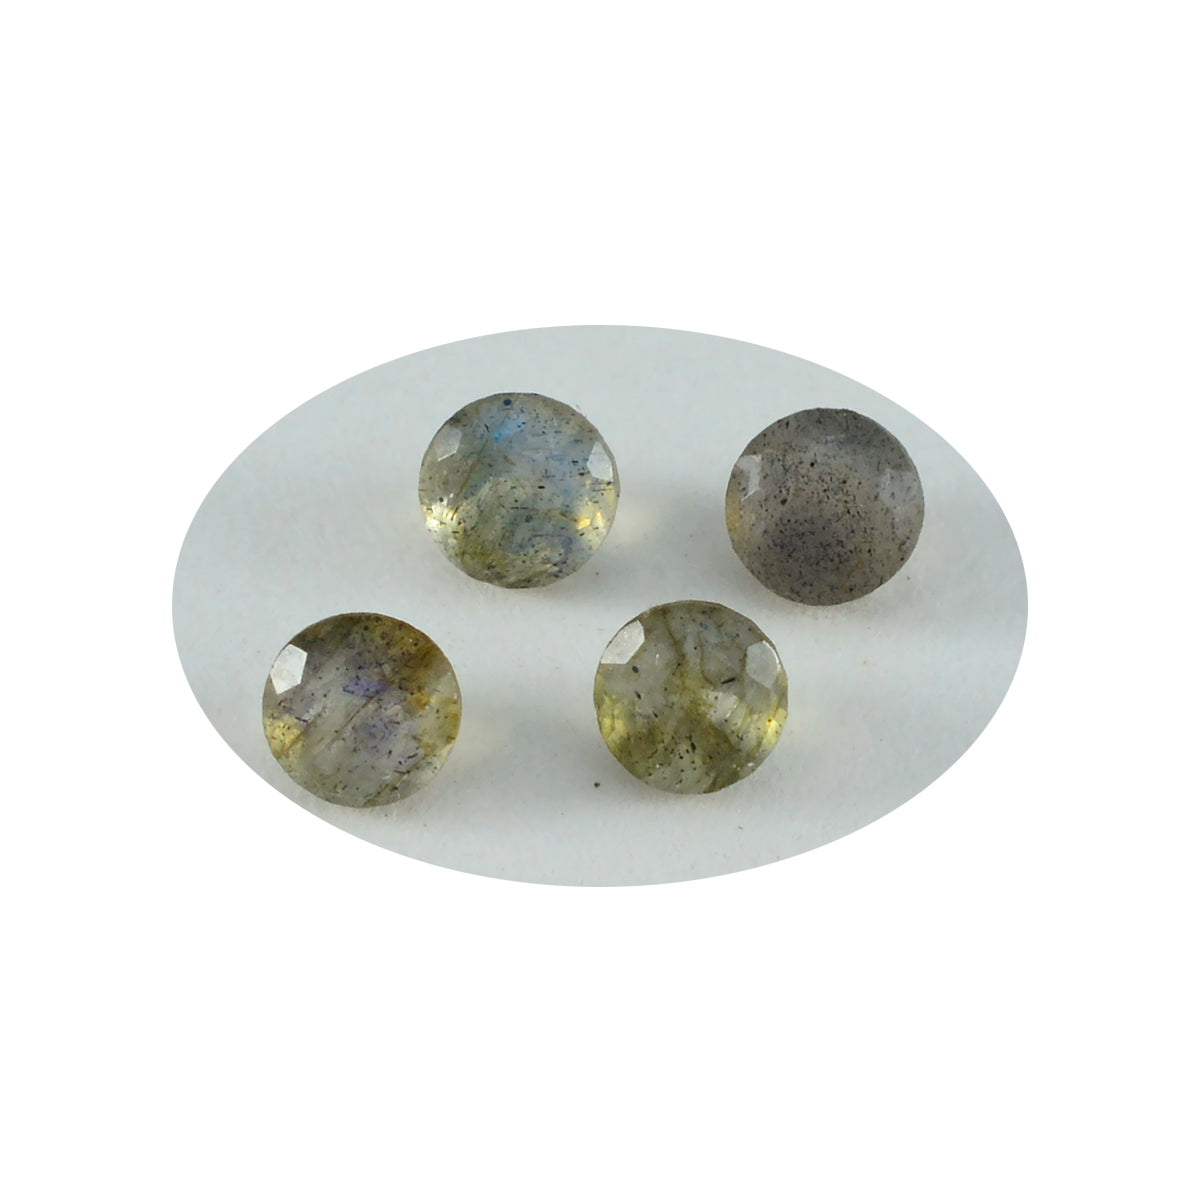 Riyogems 1PC Natural Grey Labradorite Faceted 3x3 mm Round Shape sweet Quality Loose Stone